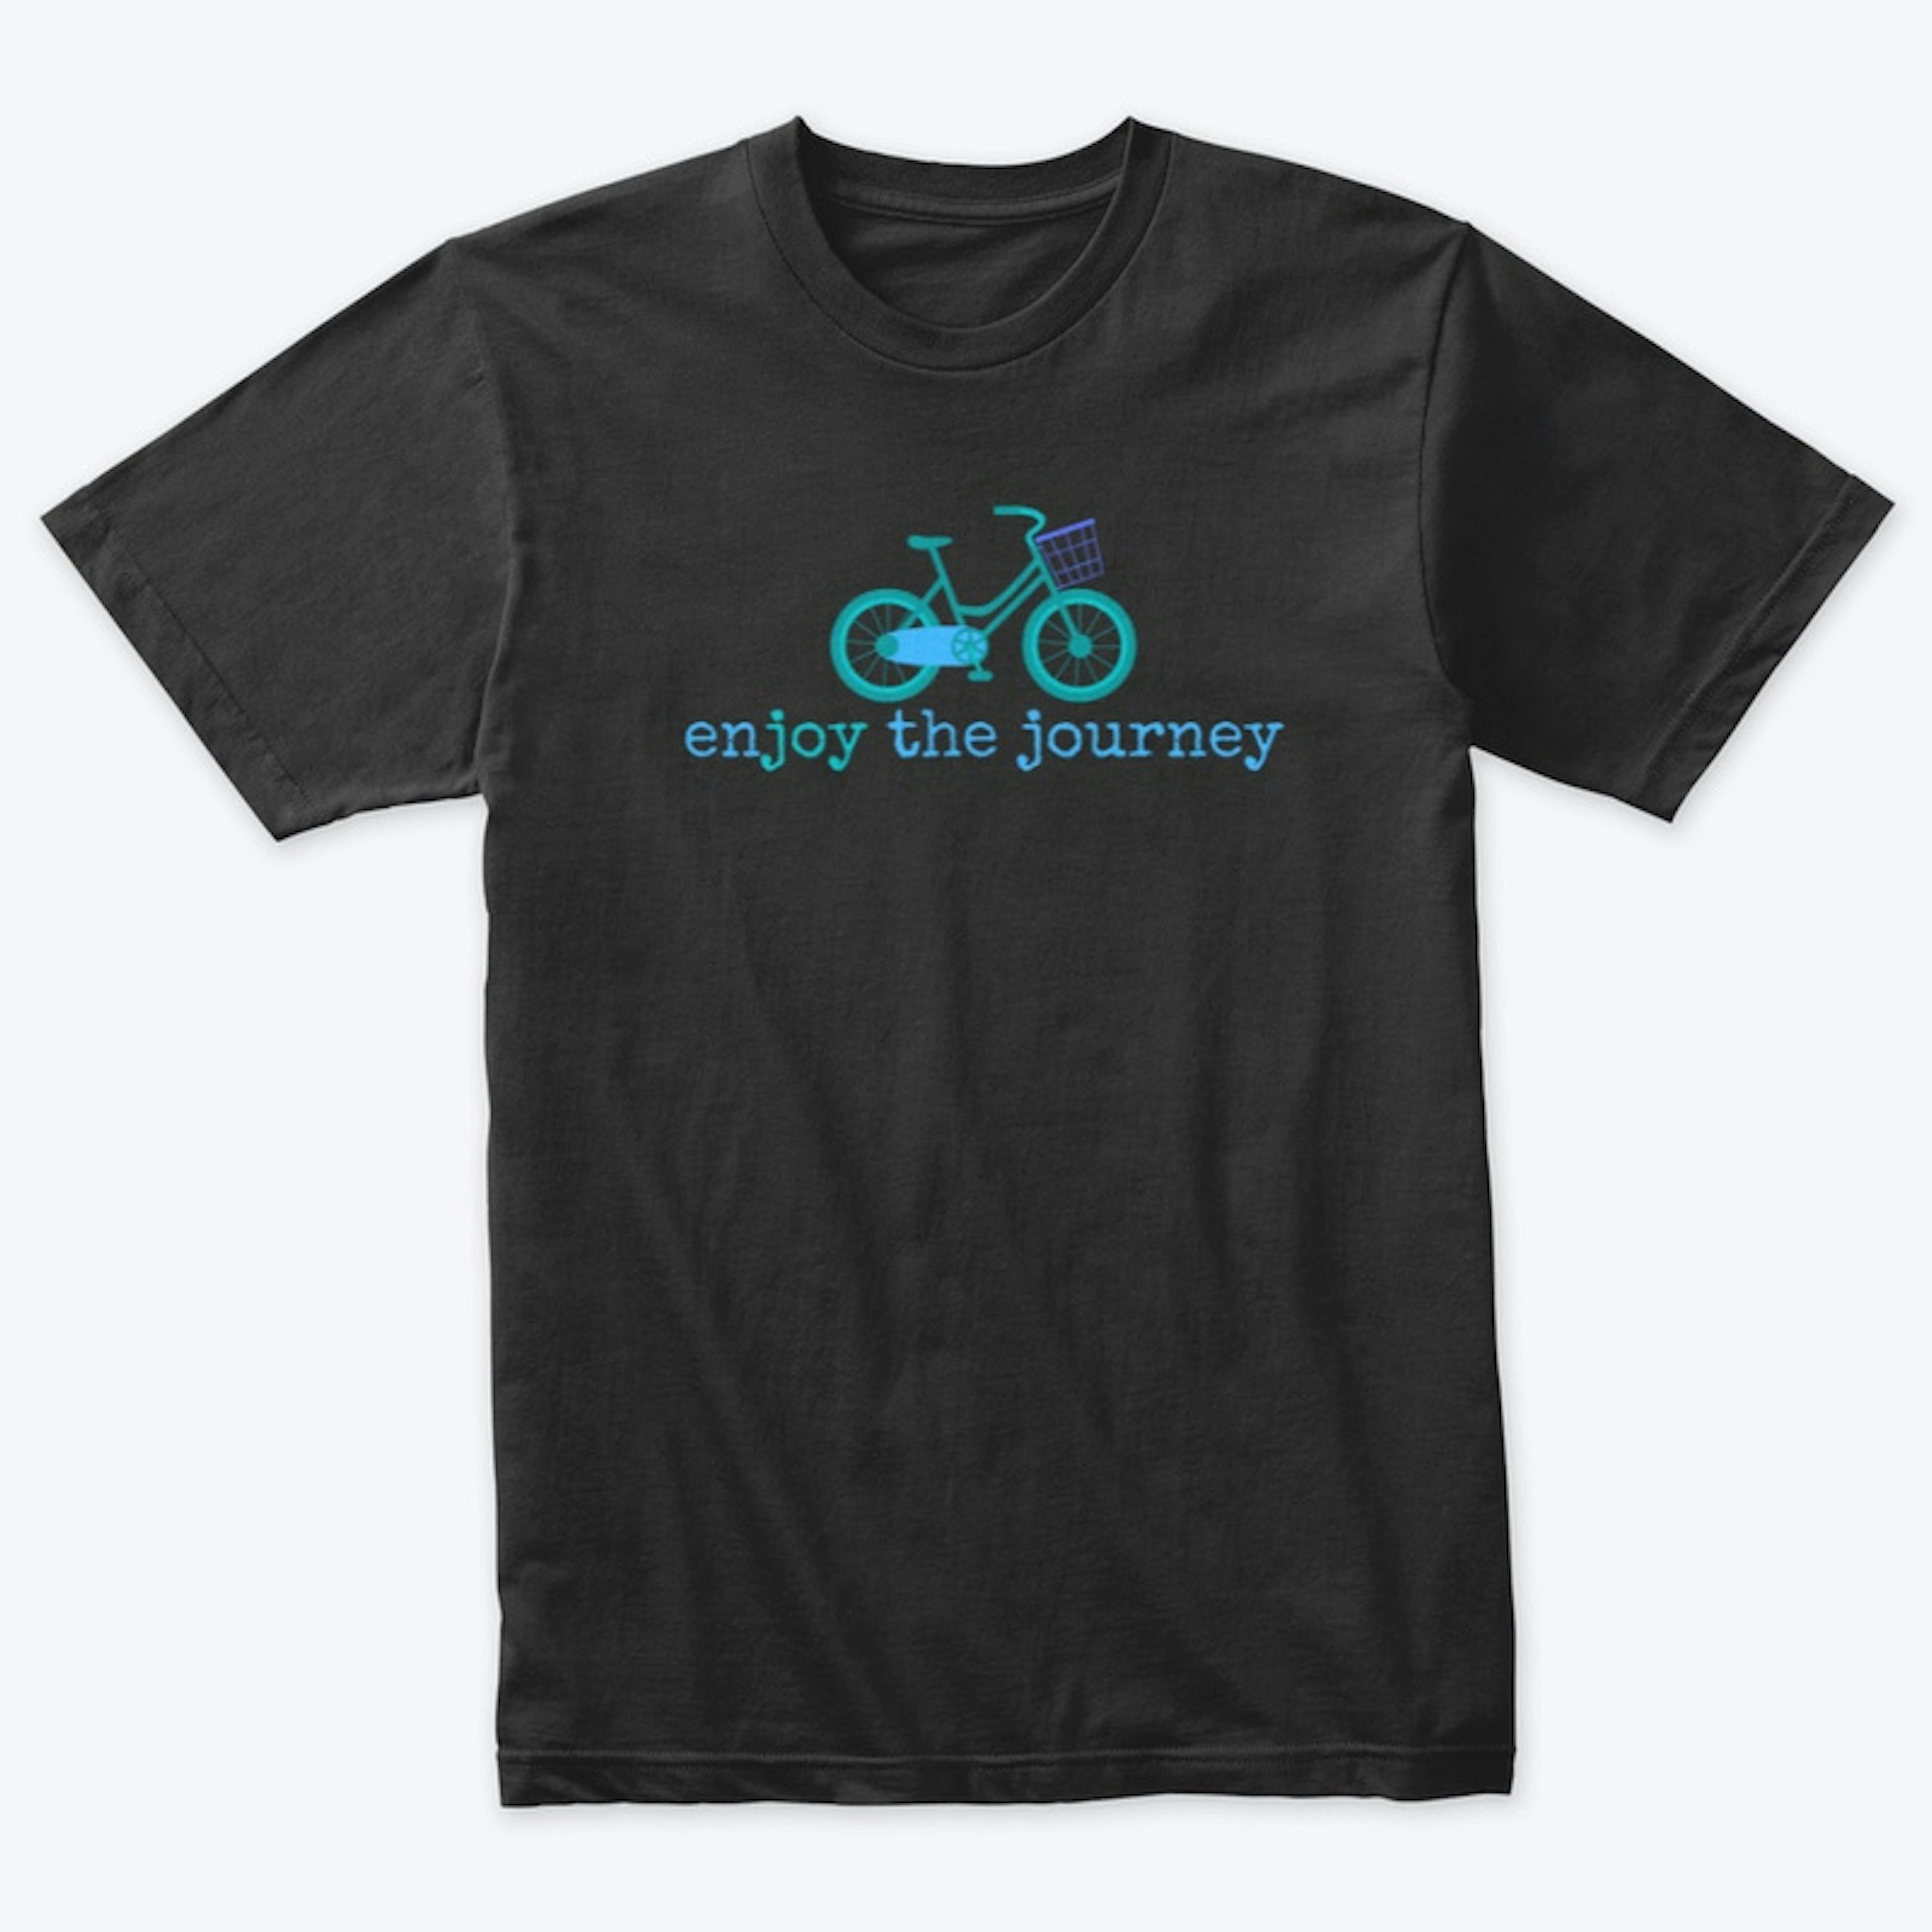  enjoy the journey- bike